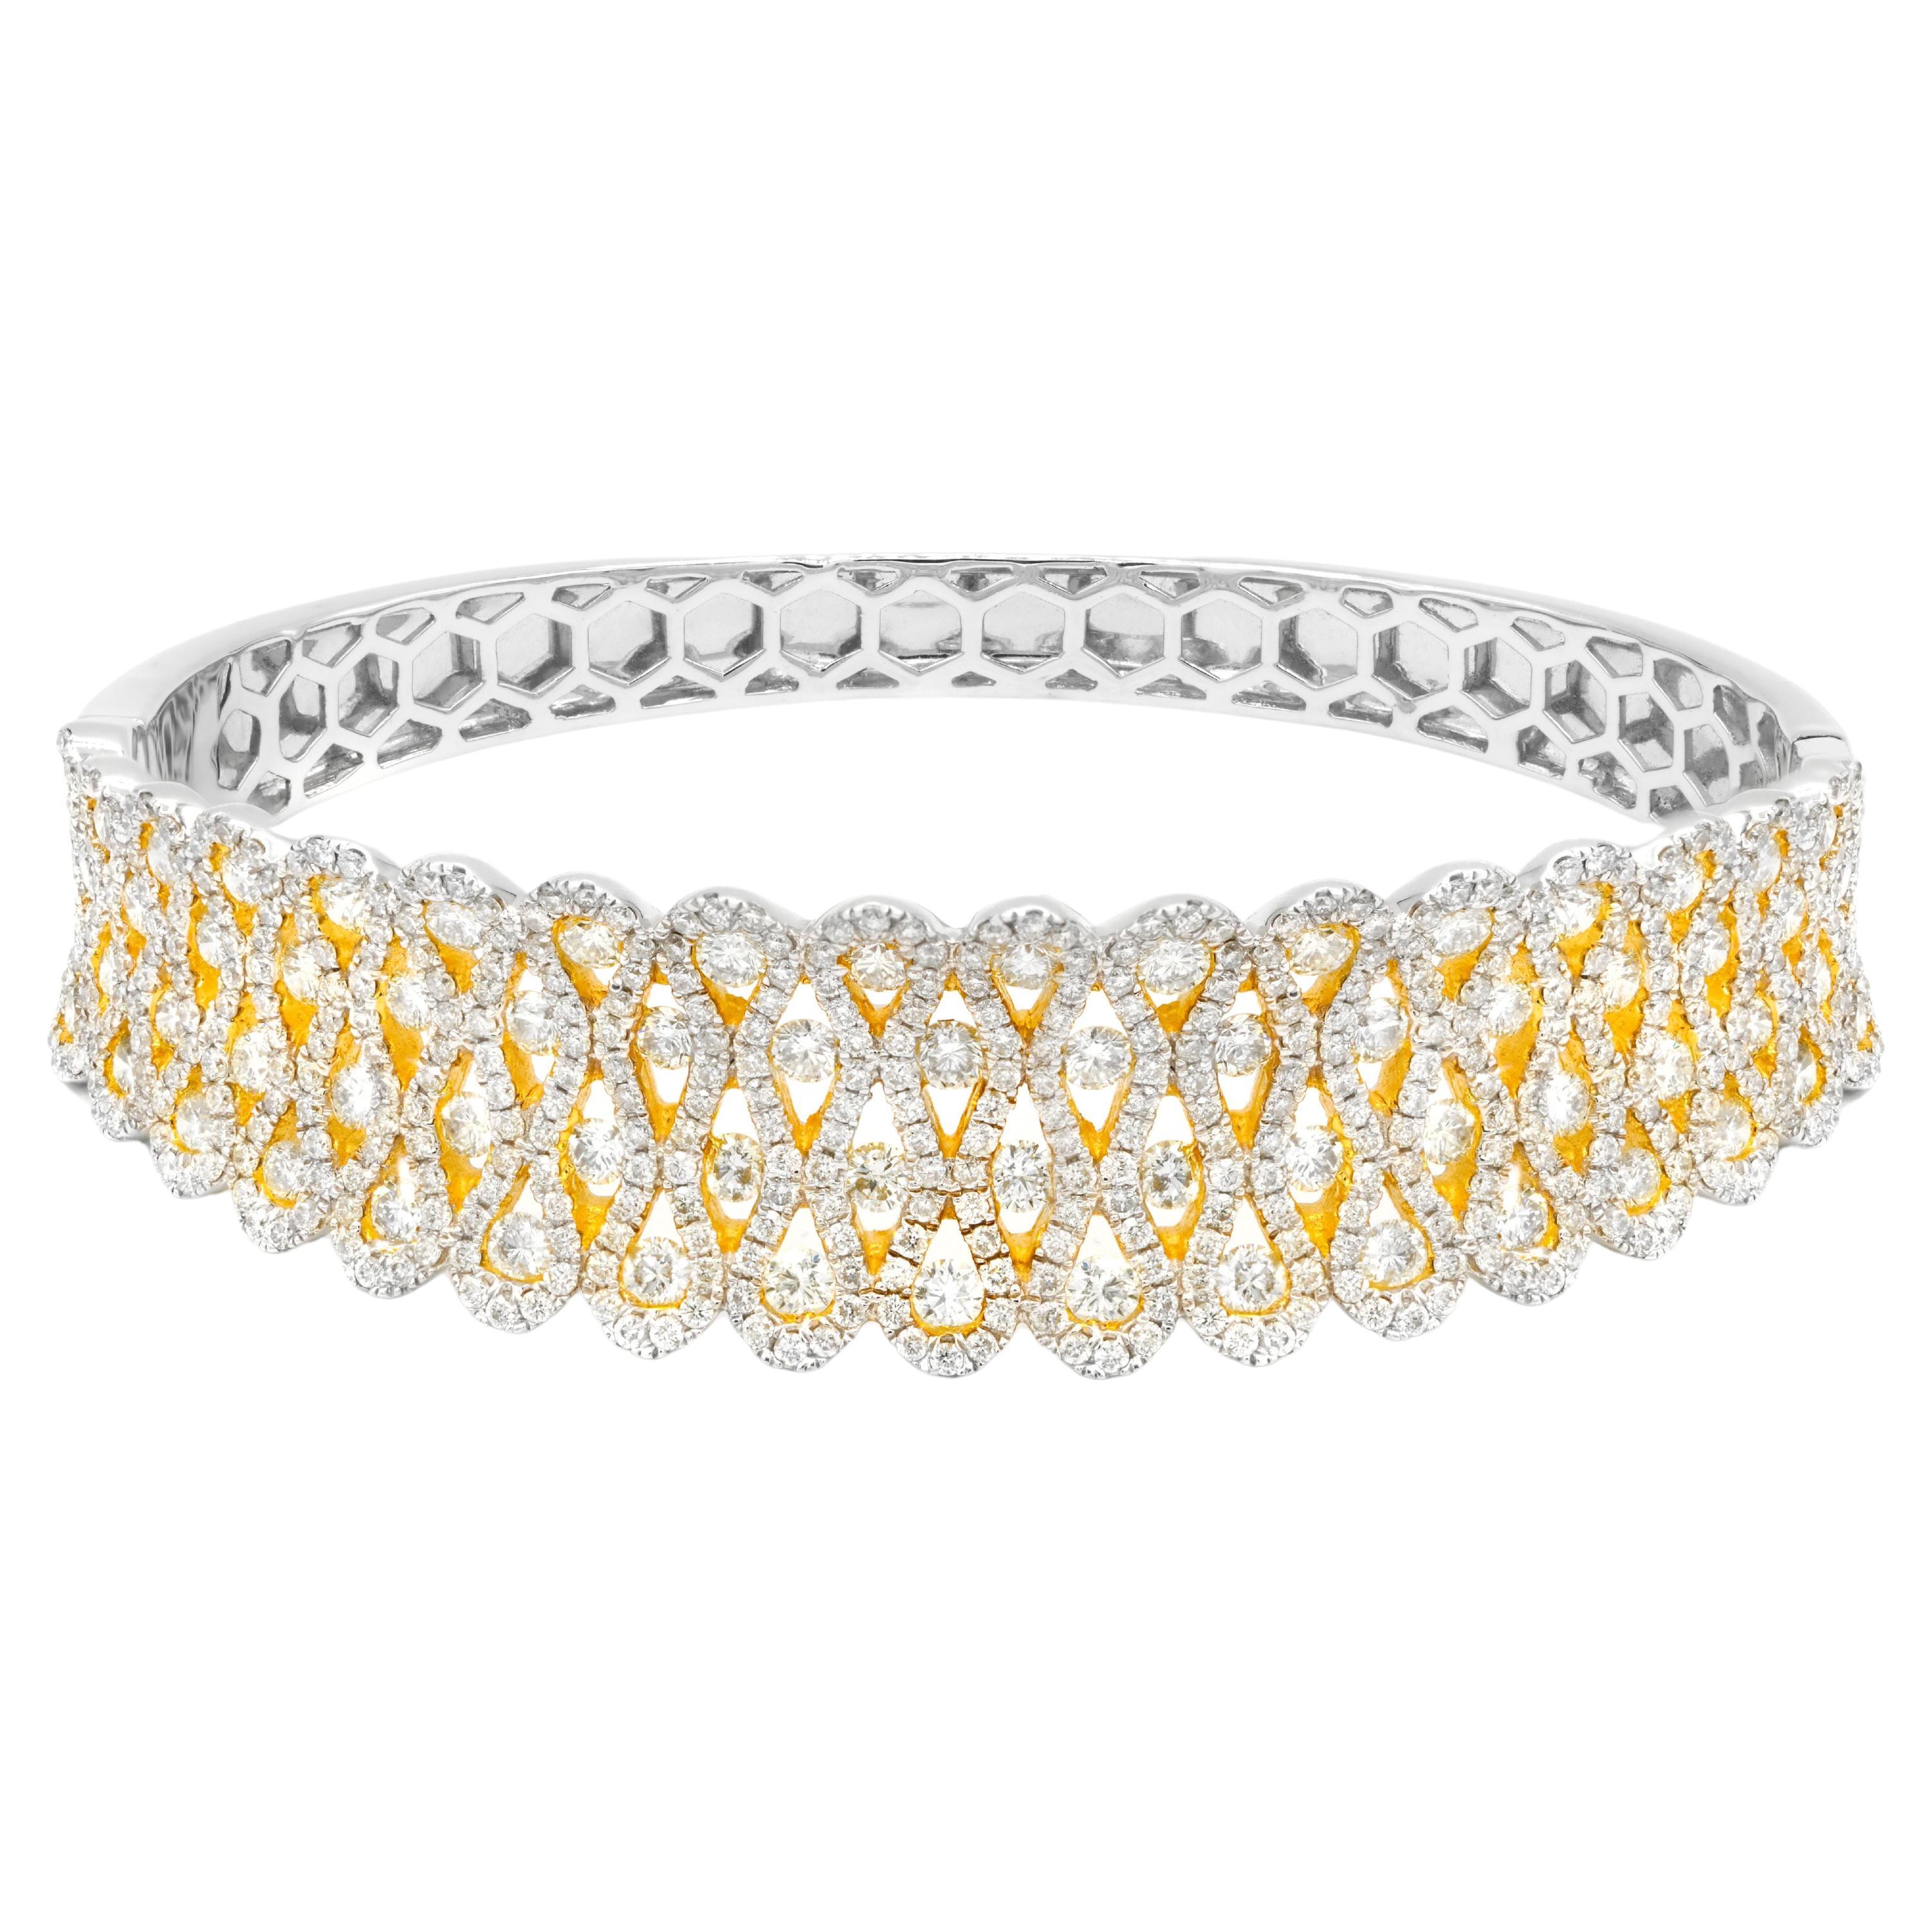 Diana M Bracelet mode en or blanc 18 carats